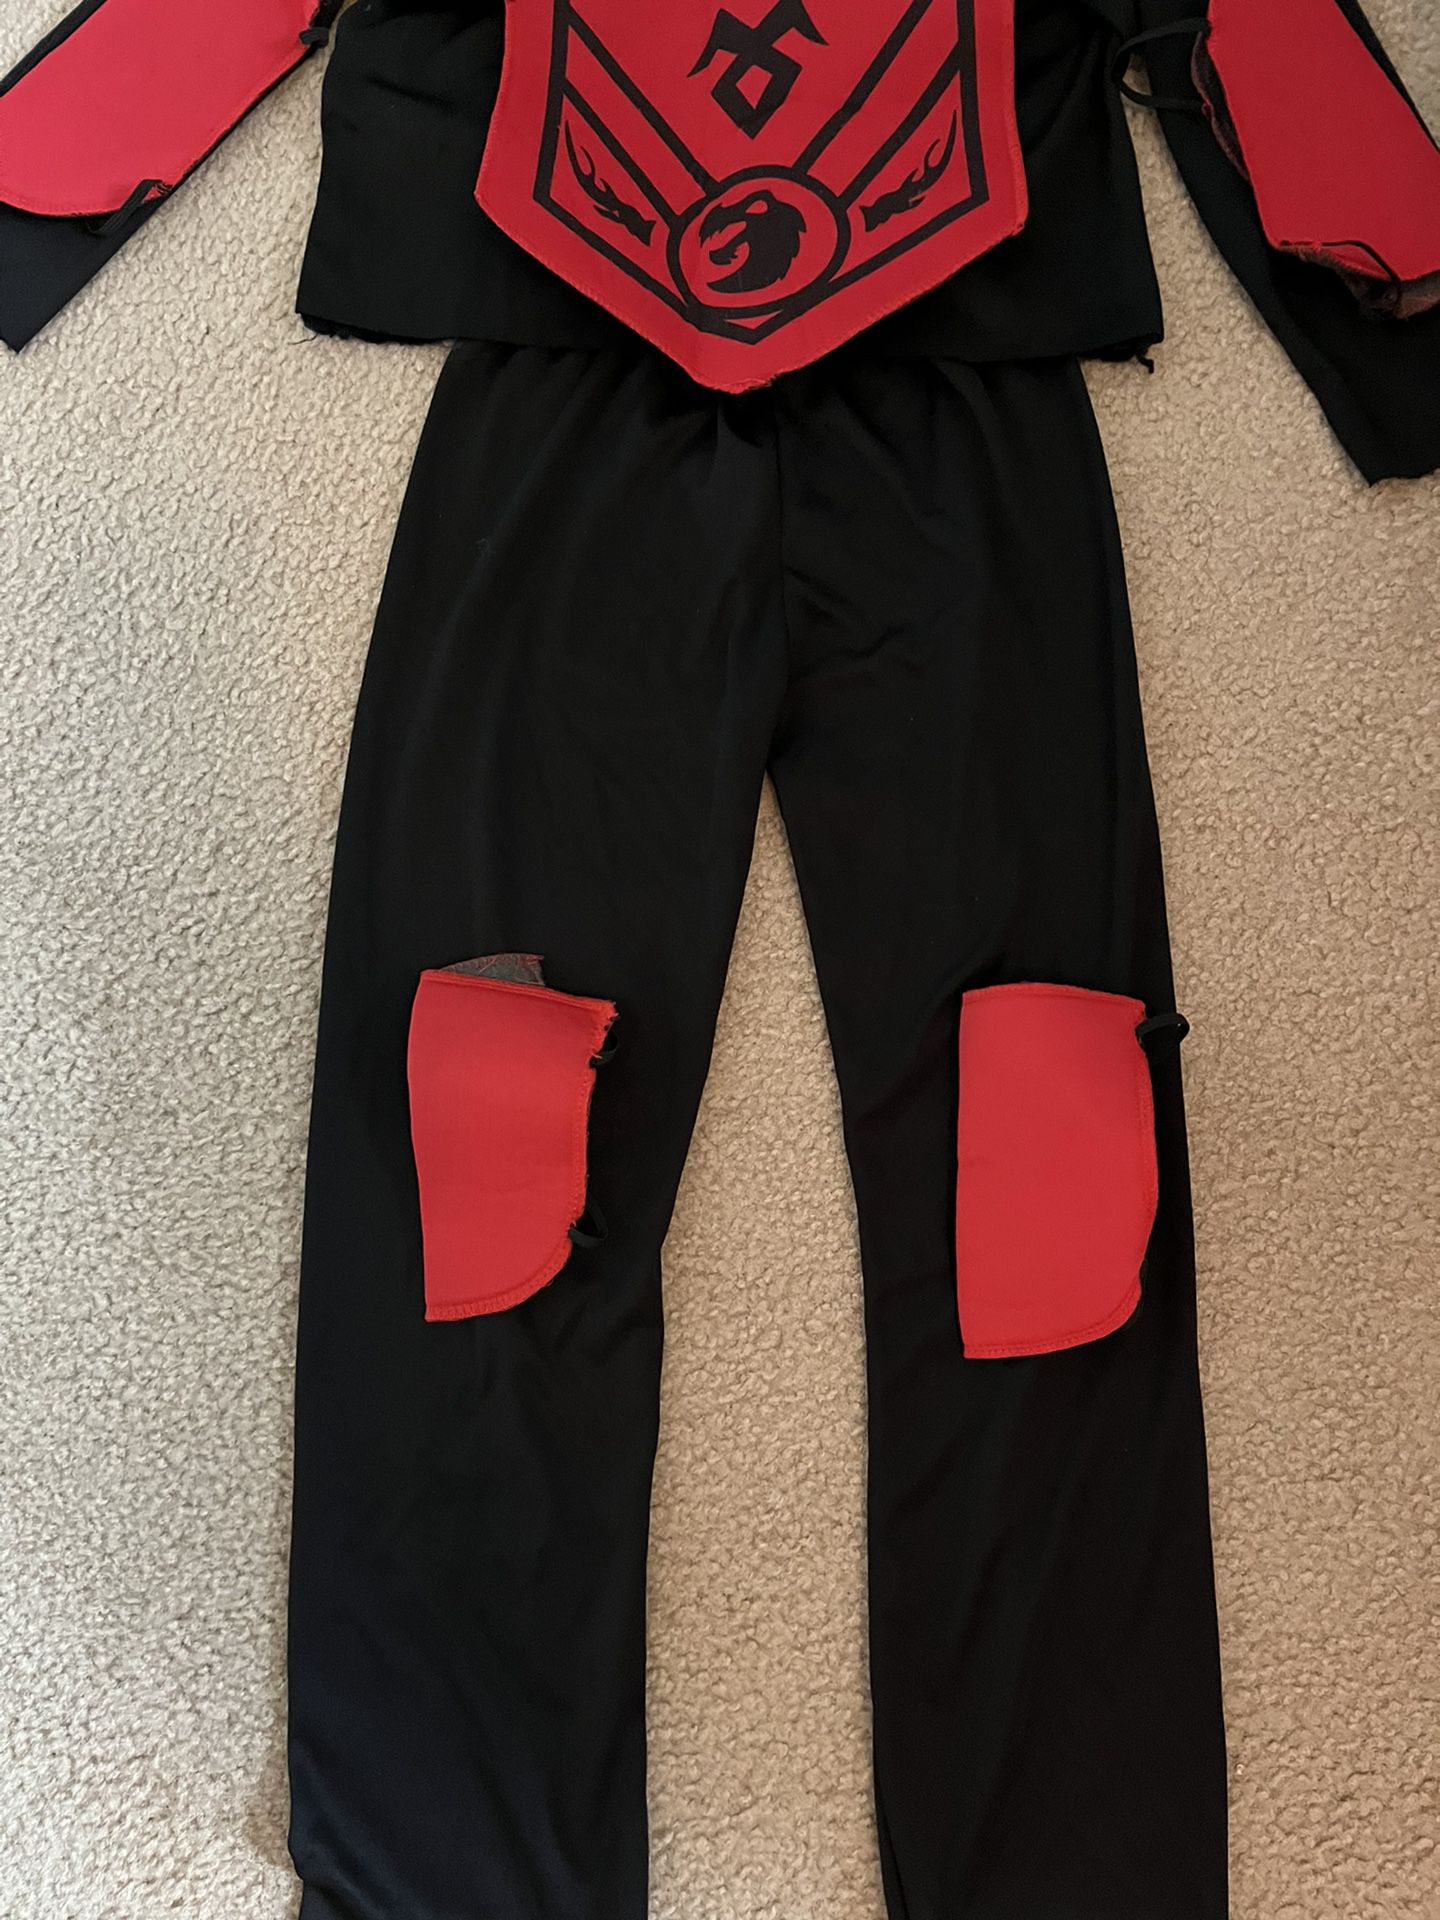 Boys Ninja Halloween Costume 